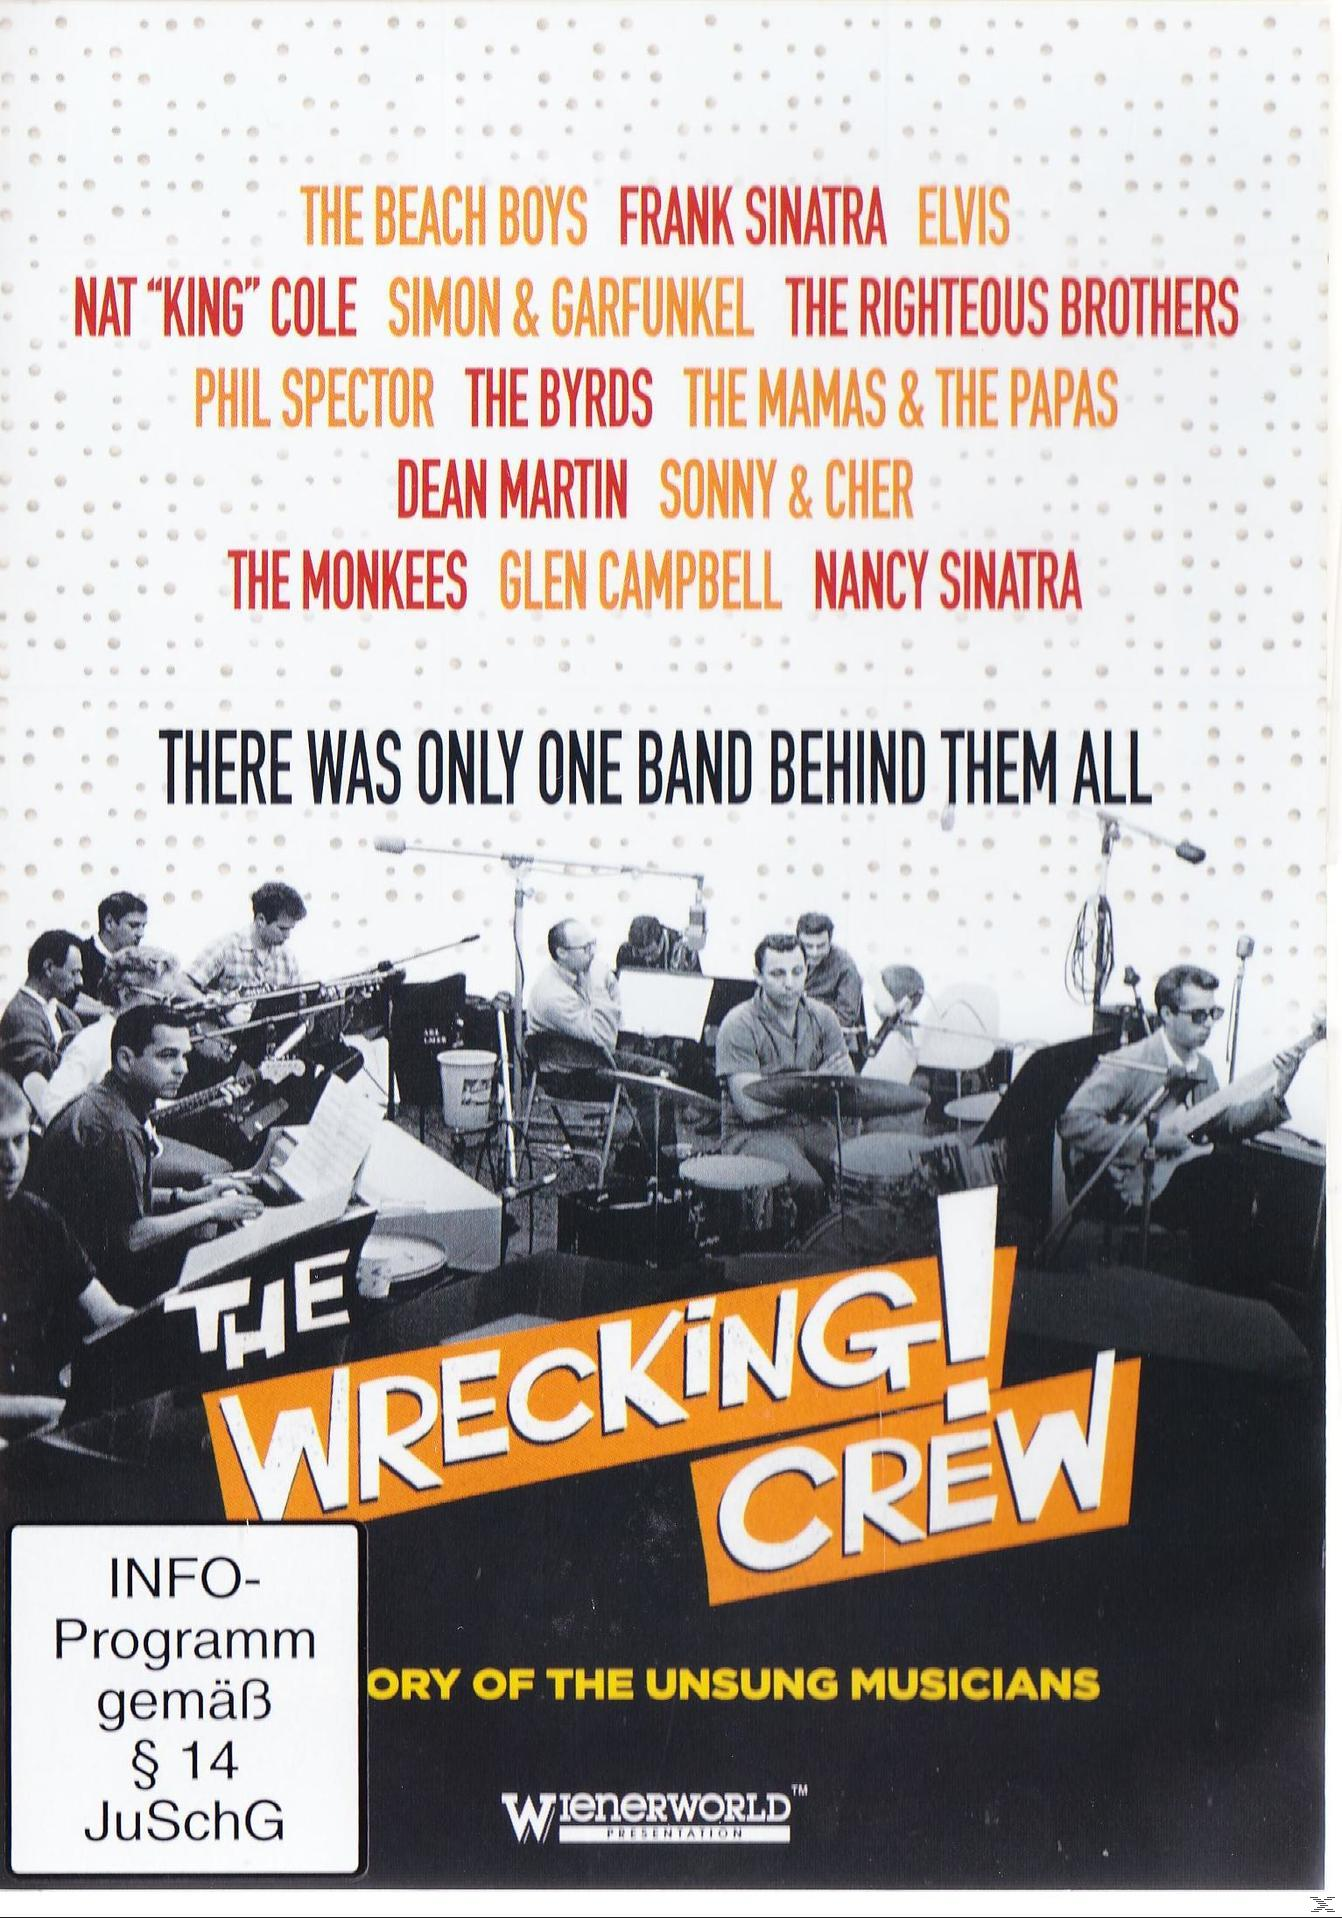 The Crew Wrecking (DVD) - - Various